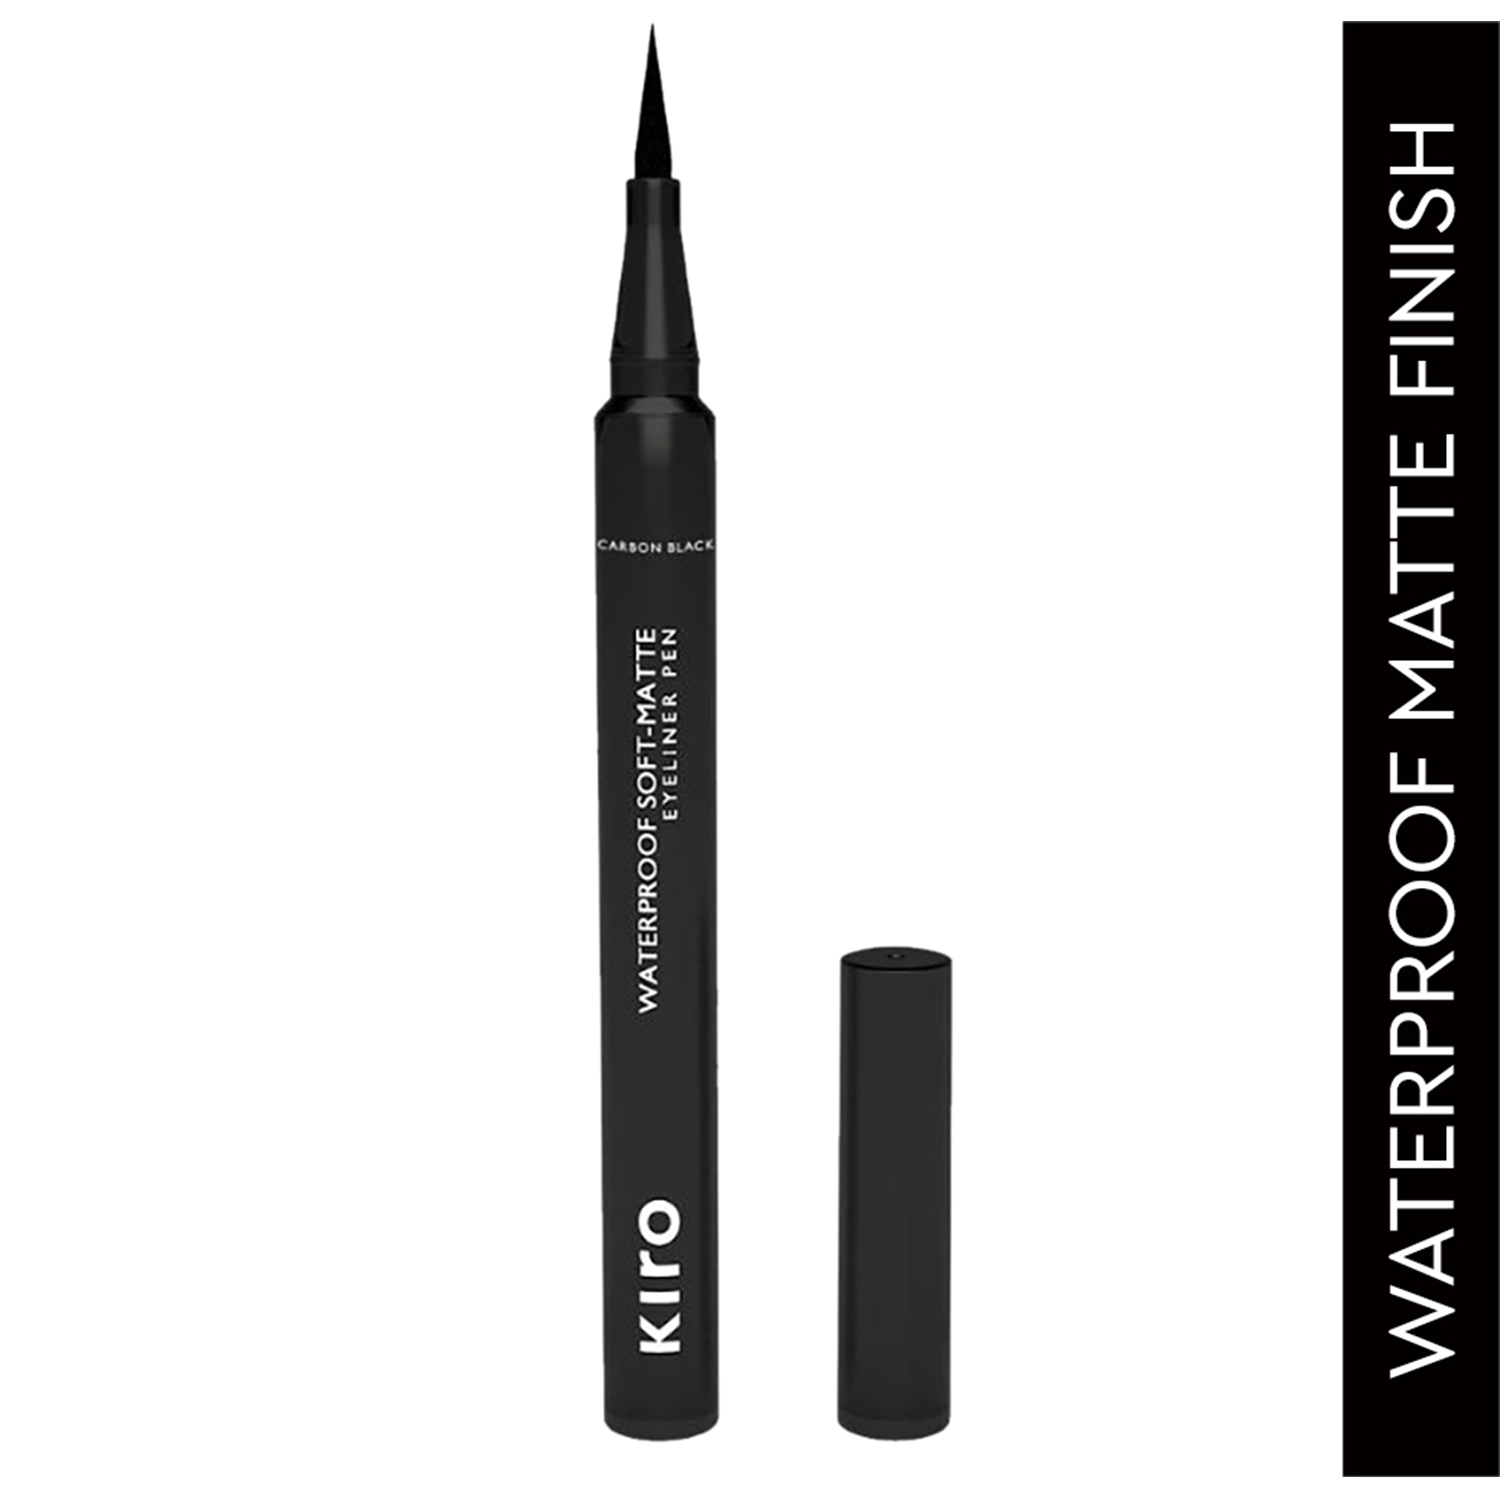 Precise Eyeliner Pen By Make-up Studio - 1 Pc Eyeliner : Target